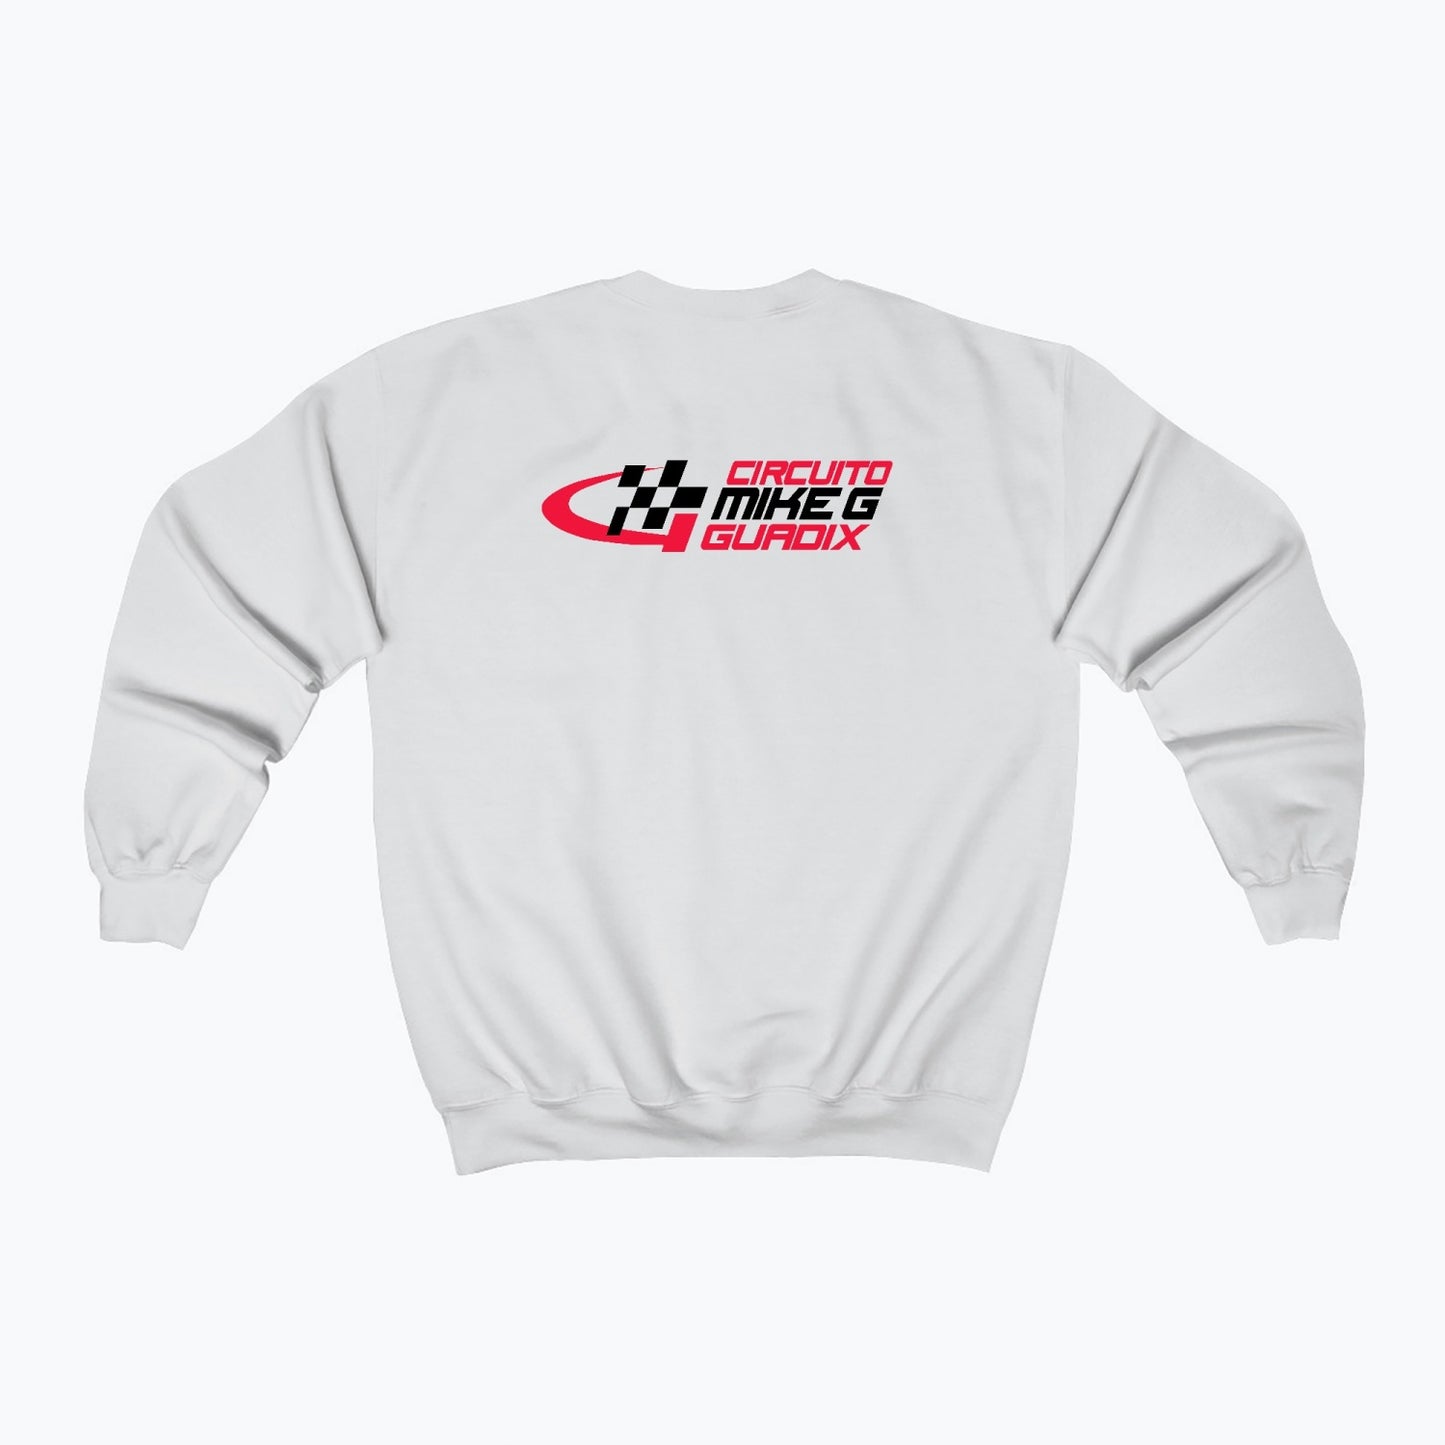 CIRCUITO MIKE G GUADIX Heavy Blend Crewneck Sweatshirt - Titanium